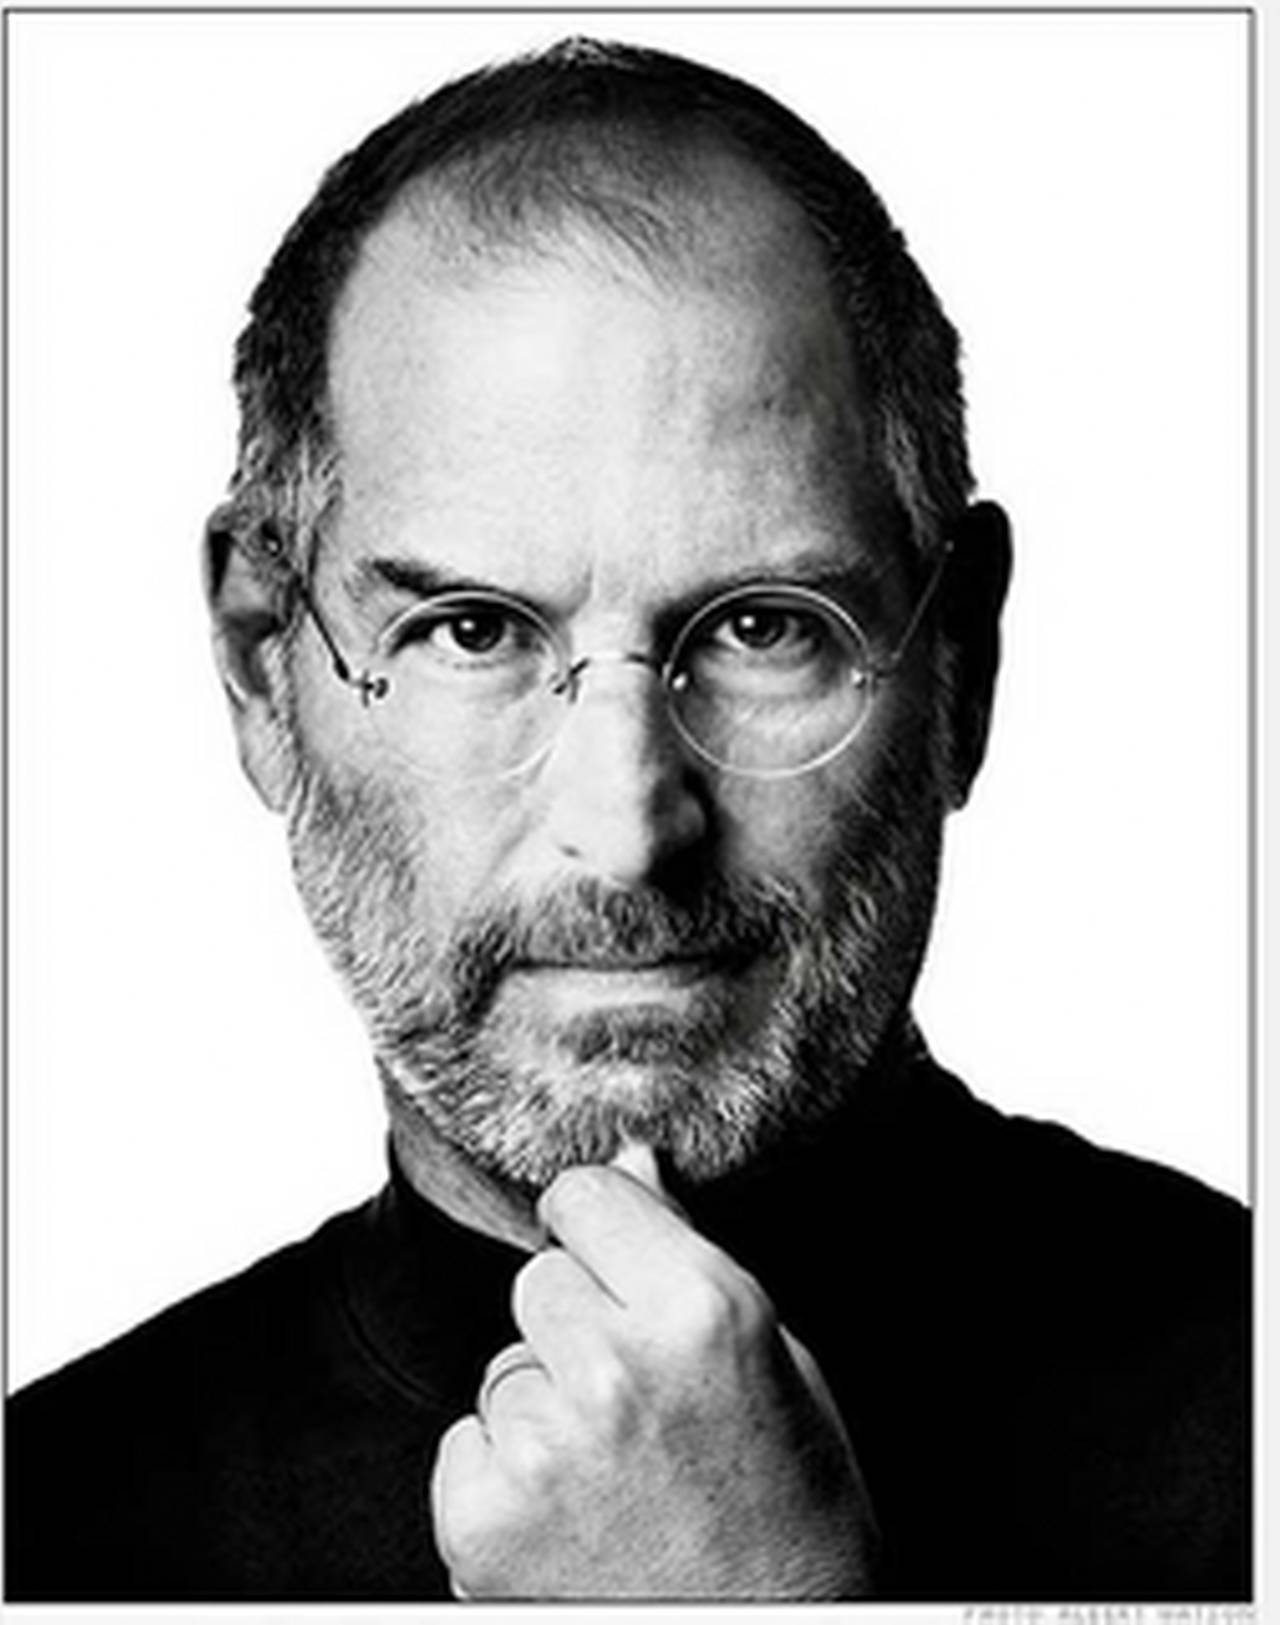 Steve Jobs - Portrait of the Businessman in turtleneck, fine art photograpy 2006